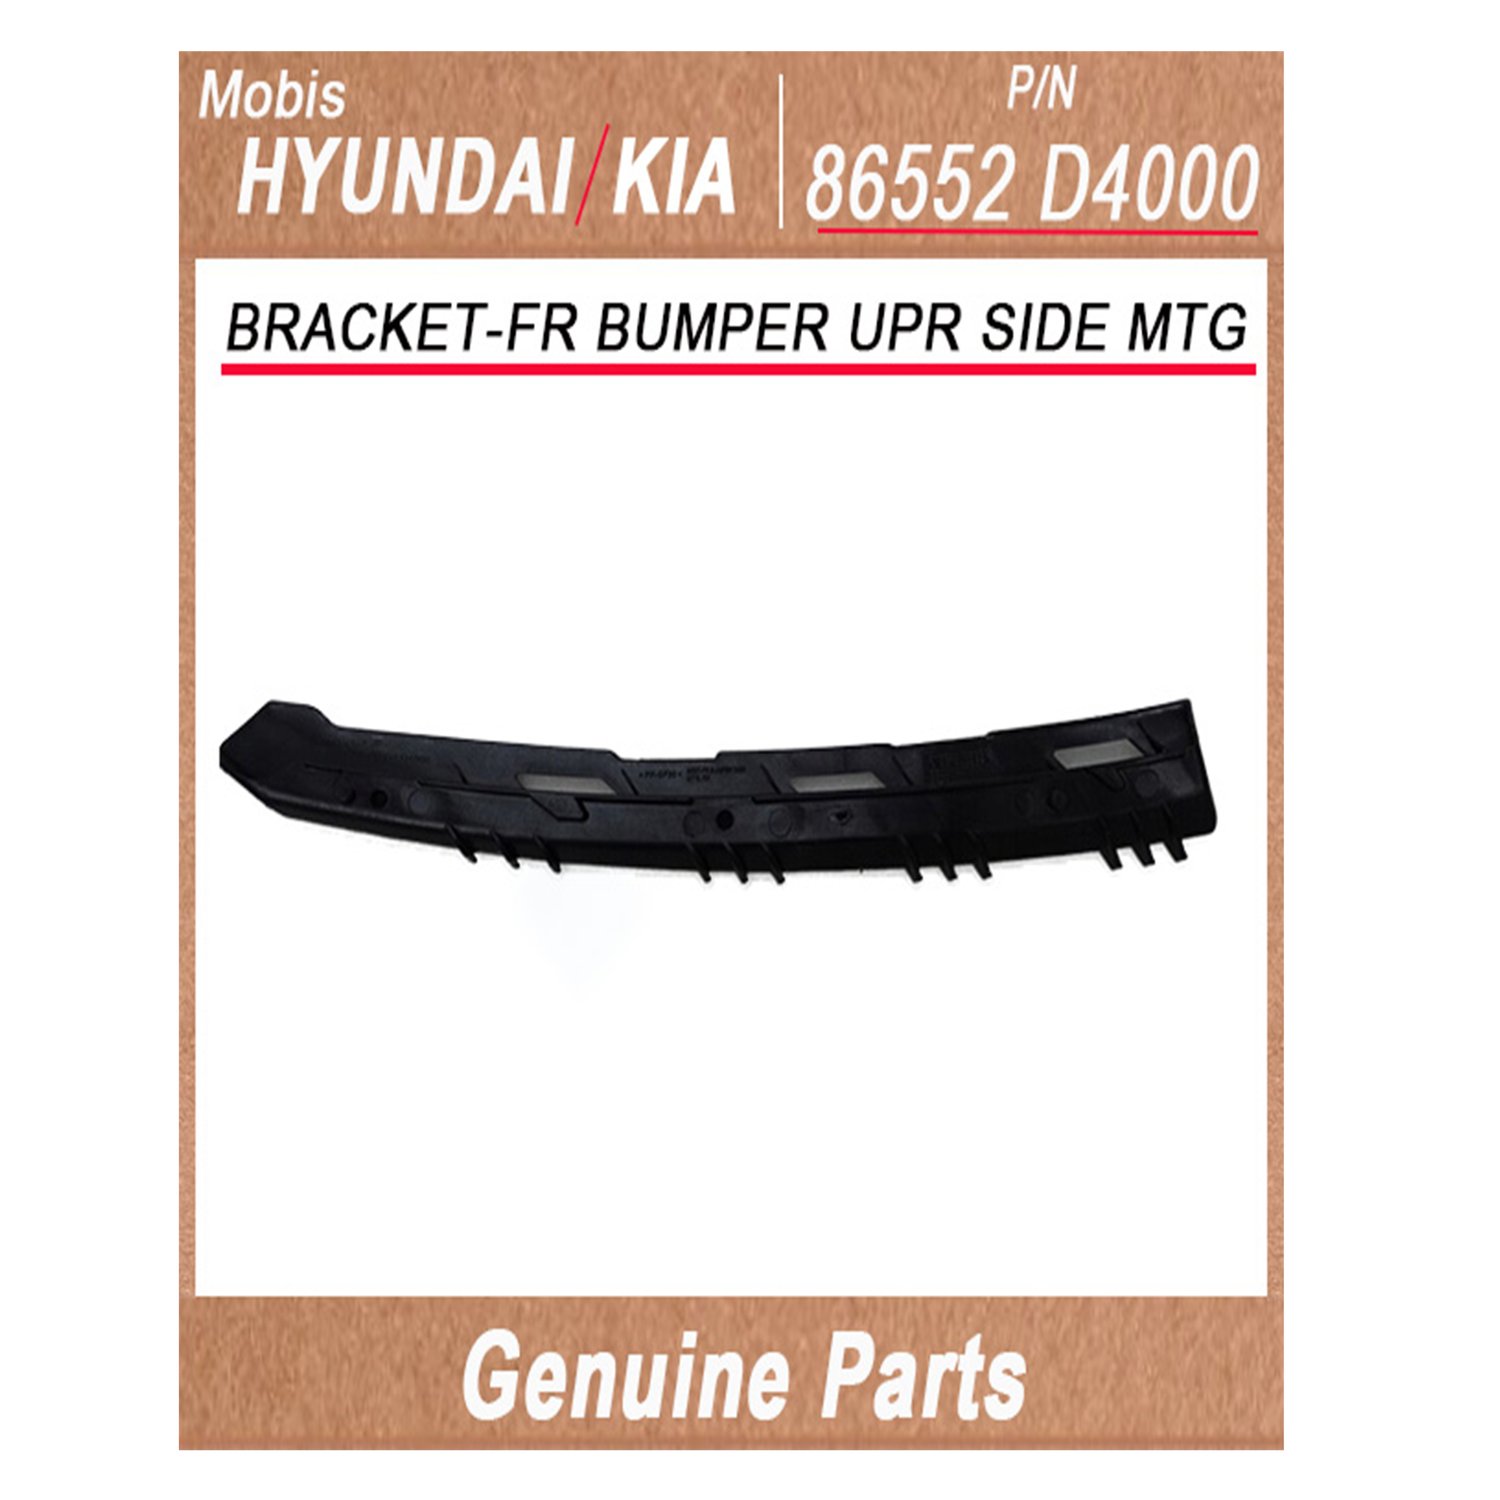 86552D4000 _ BRACKET_FR BUMPER UPR SIDE MTG _ Genuine Korean Automotive Spare Parts _ Hyundai Kia _M